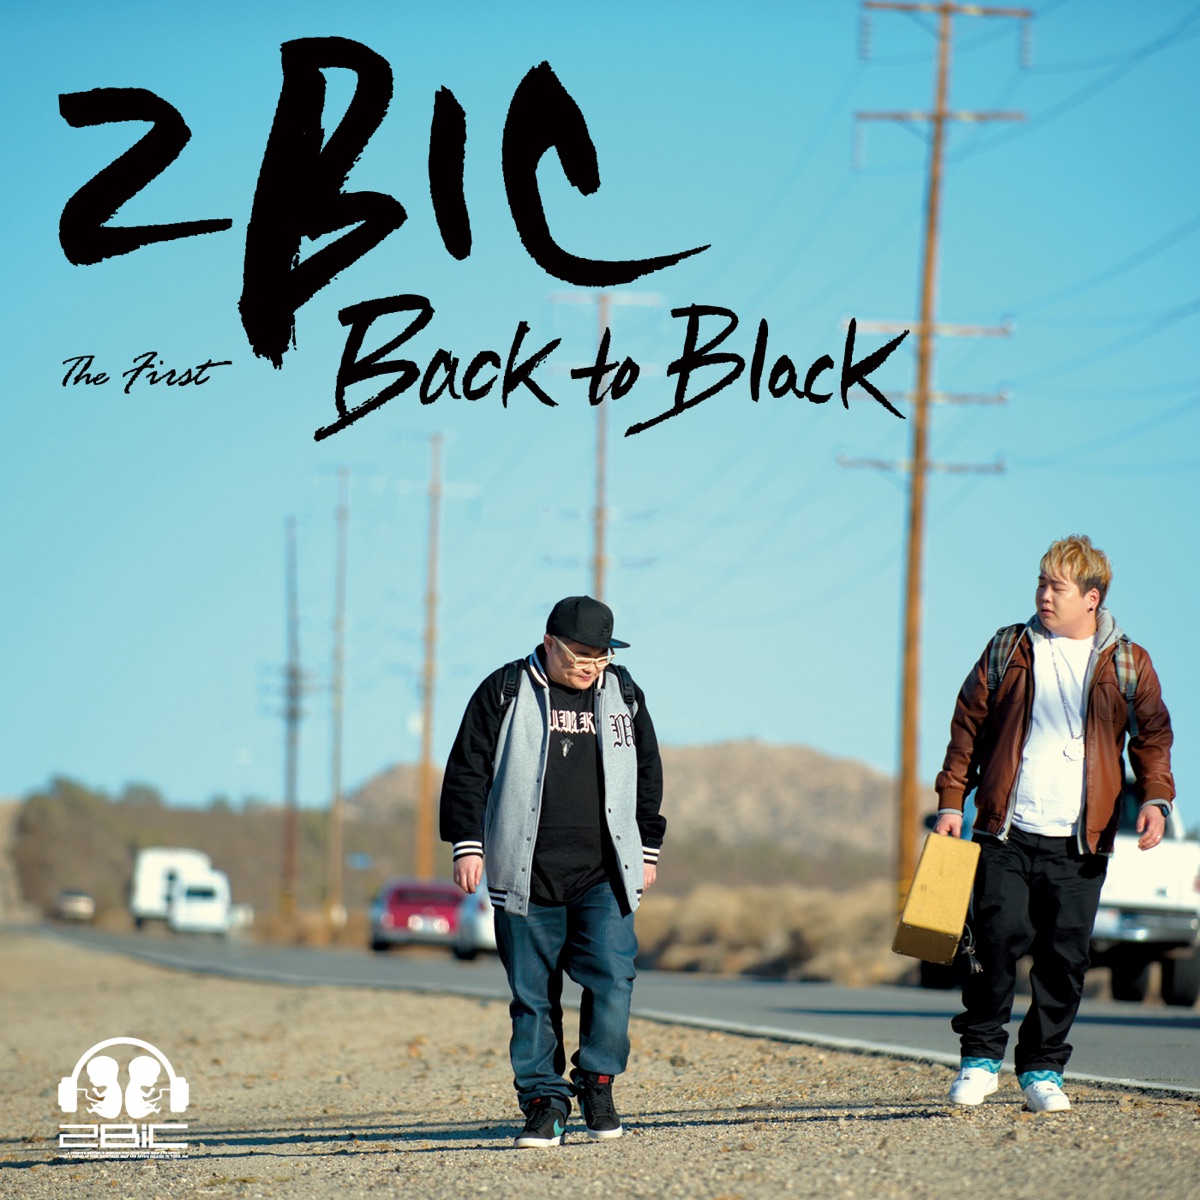 2Bic – Back to Black